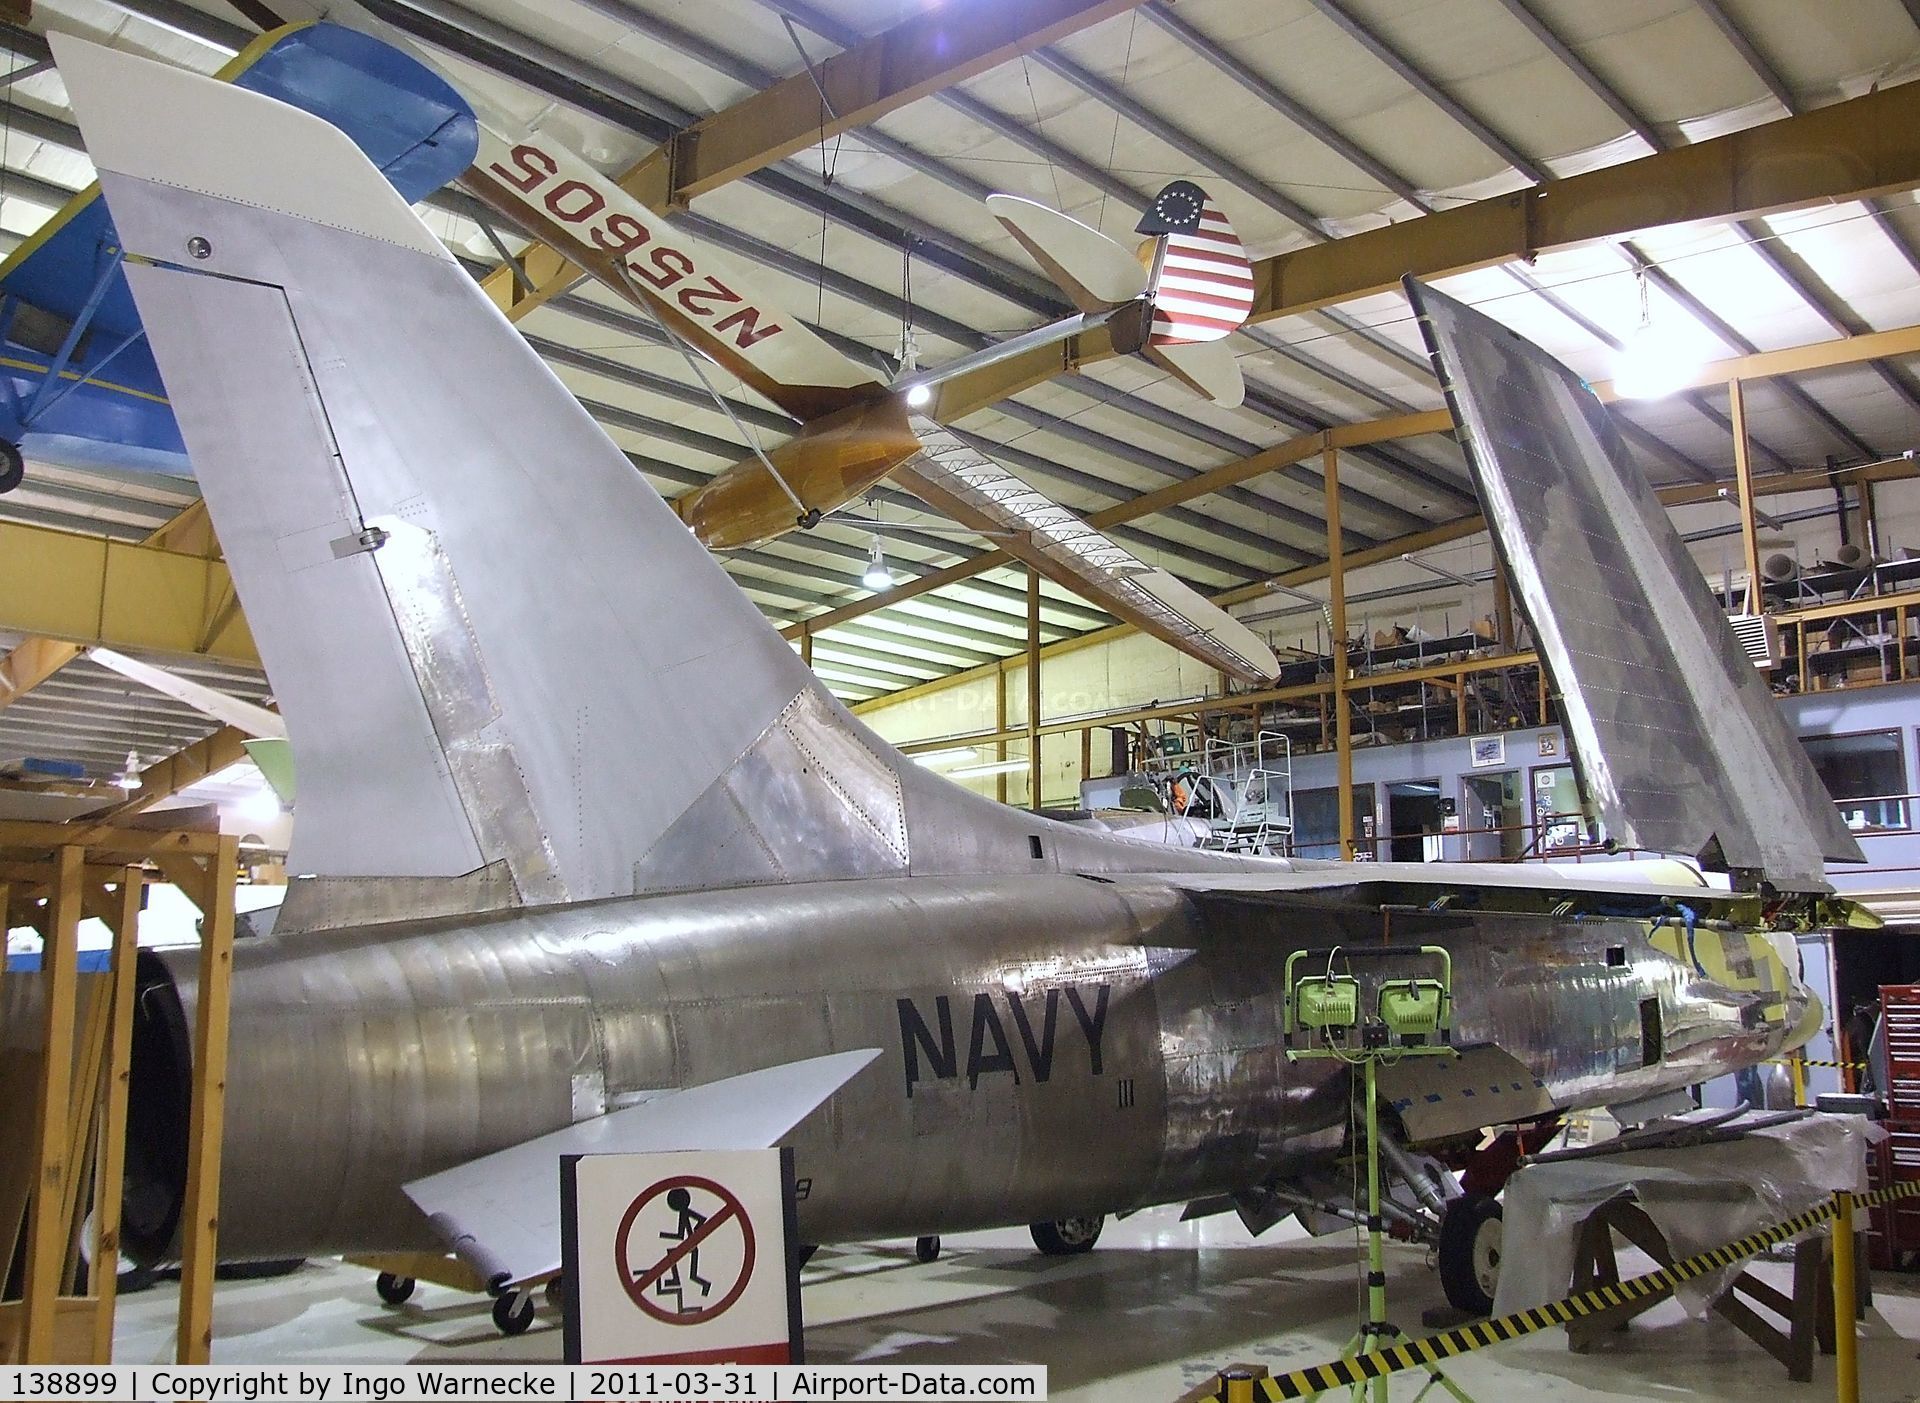 138899, 1955 Vought XF8U-1/XF-8A C/N Not found 138899, Vought XF8U-1 (XF-8A) Crusader prototype being restored at the Museum of Flight Restoration Center, Everett WA